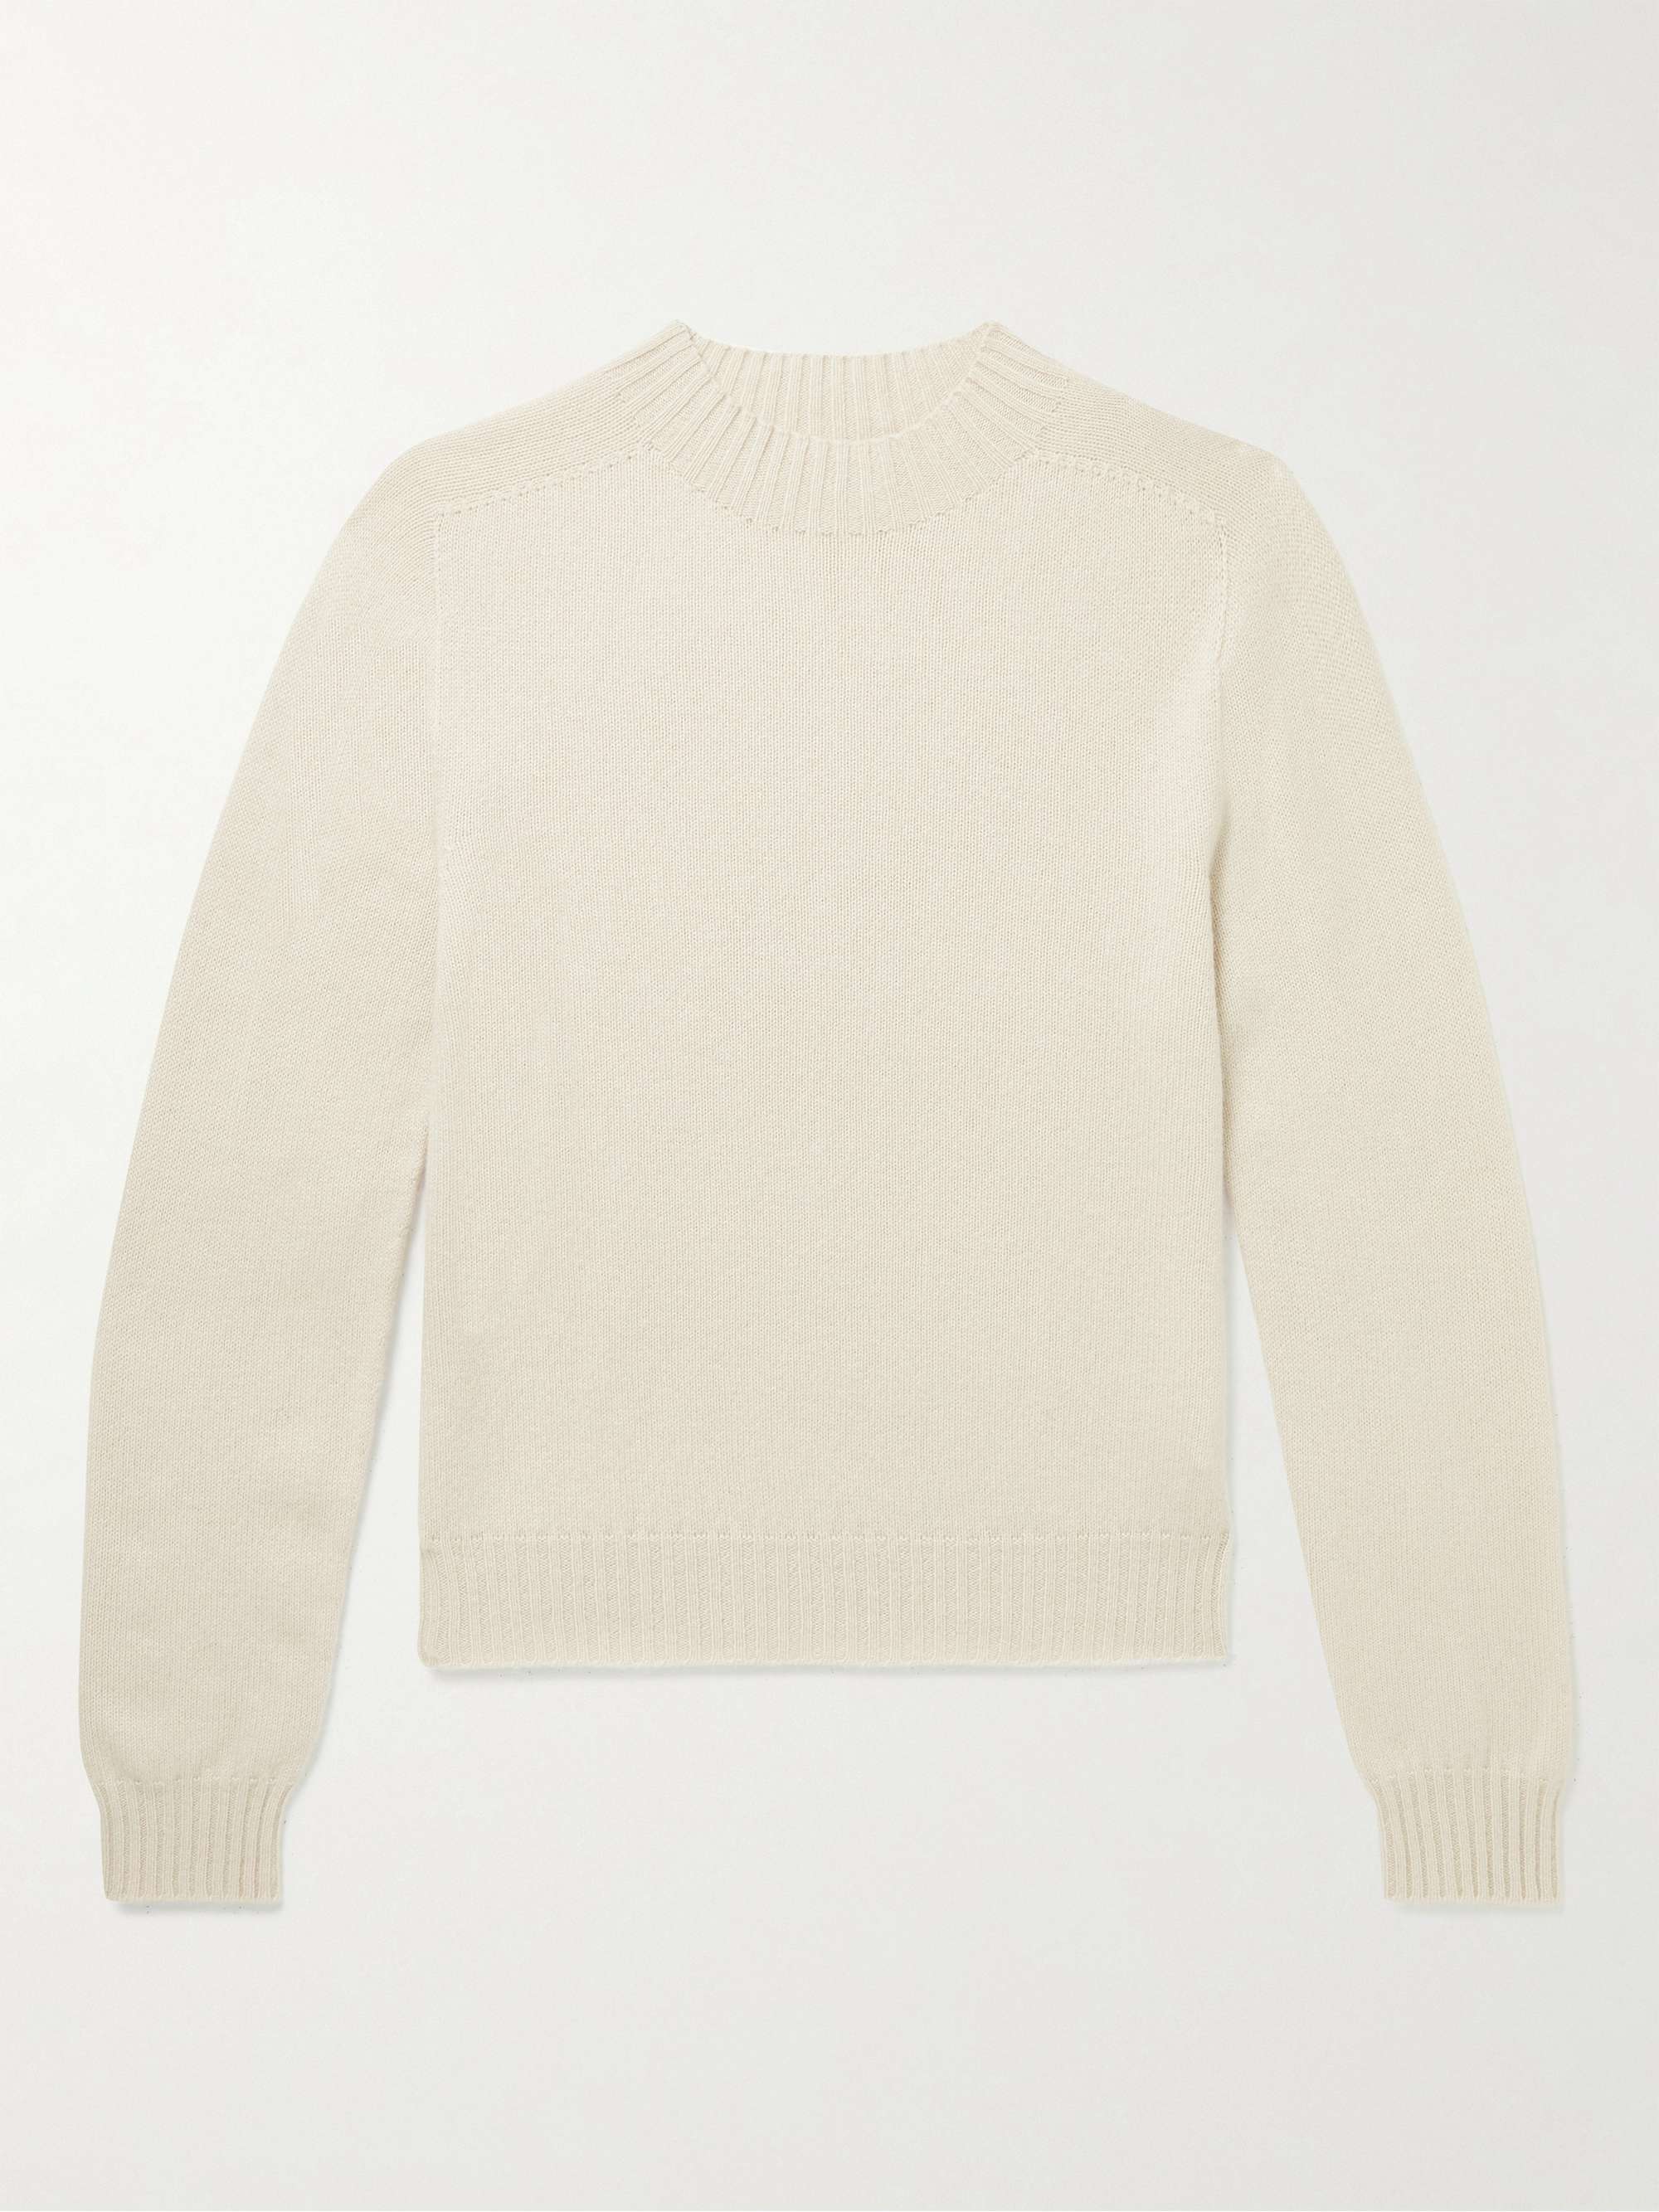 L.E.J Cashmere Mock-Neck Sweater